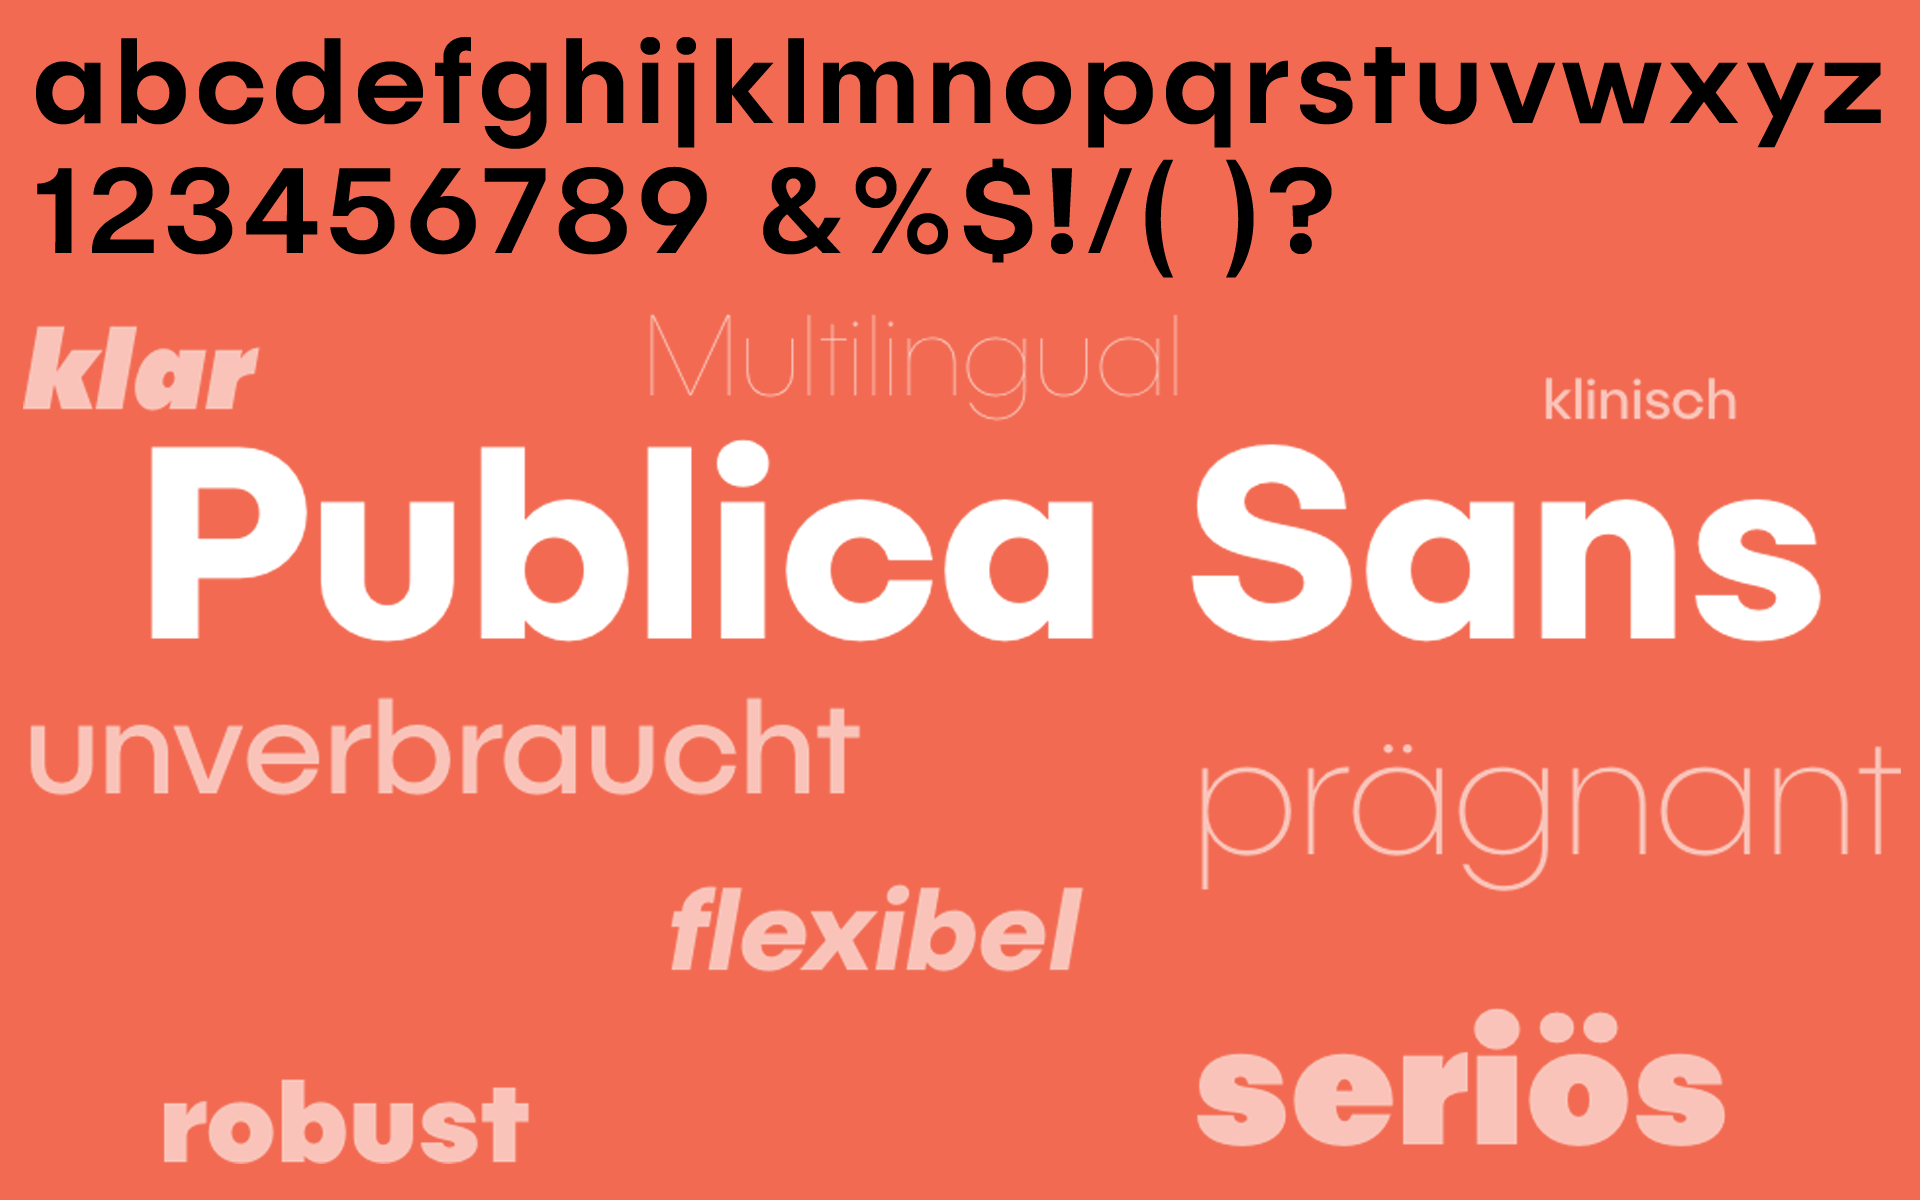 Corporate Design Andreas Vantorre, Corporate Typeface